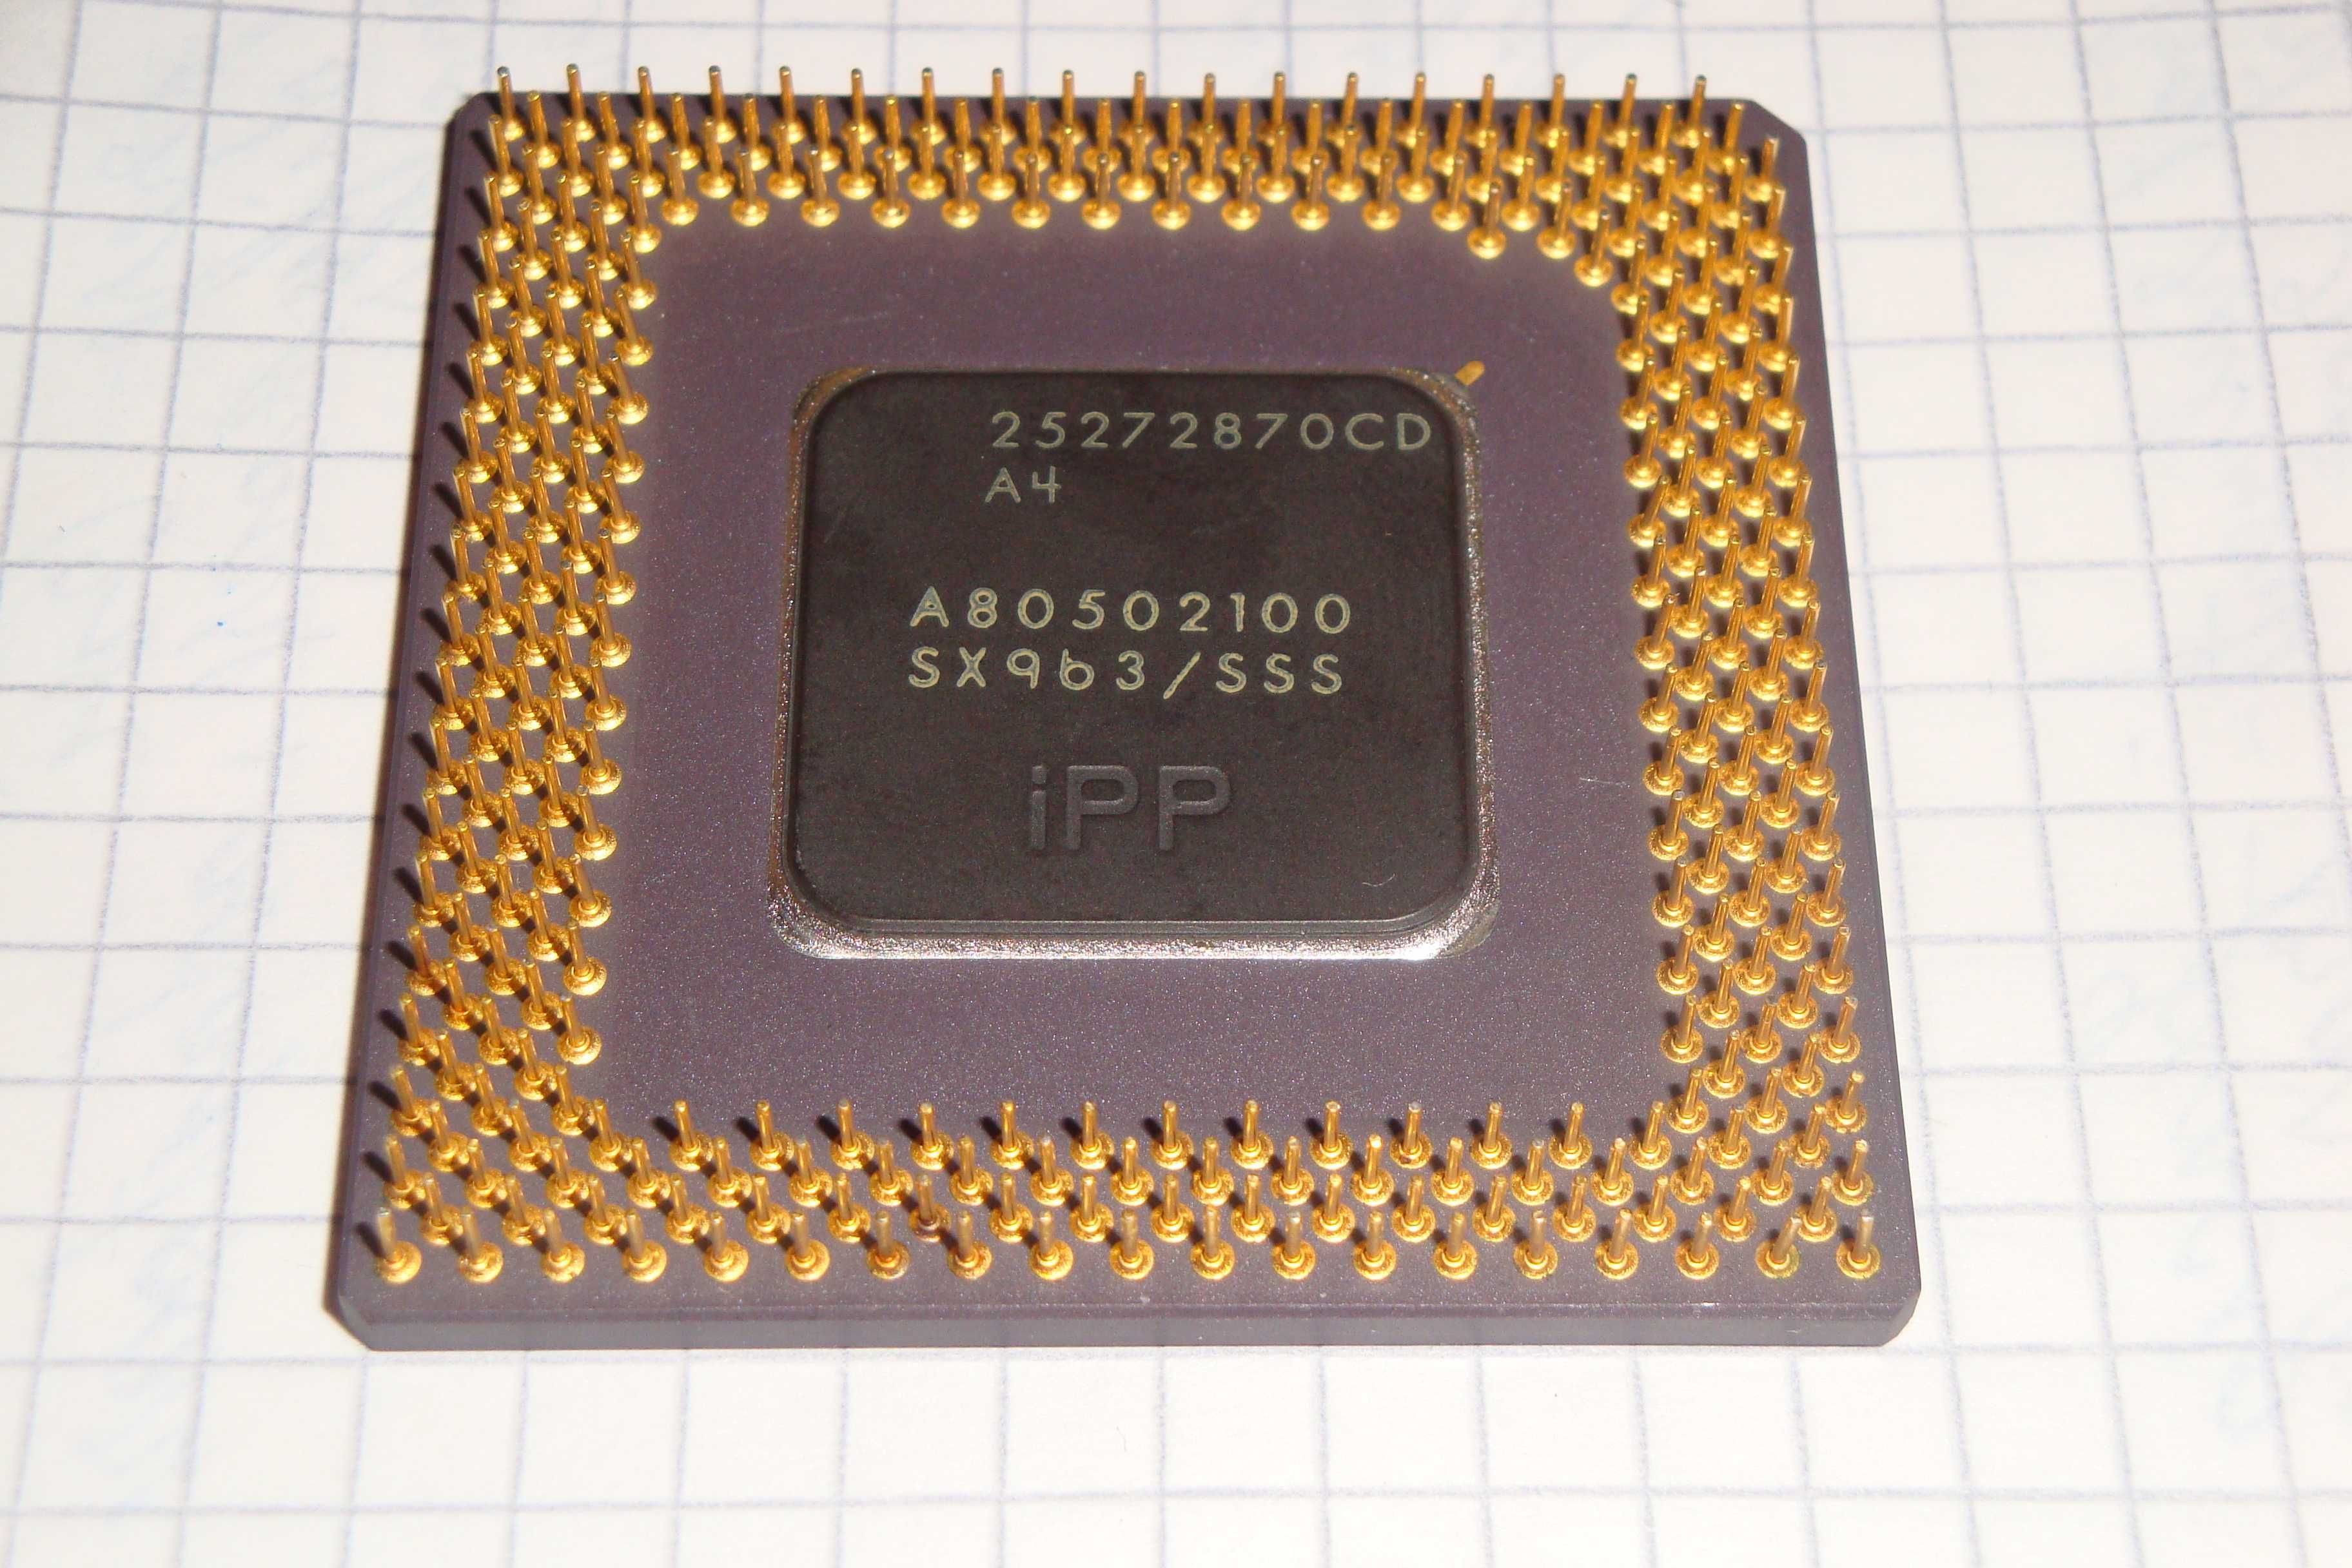 procesor vintage colectie pentium 1 MMX 100 mhz SX963